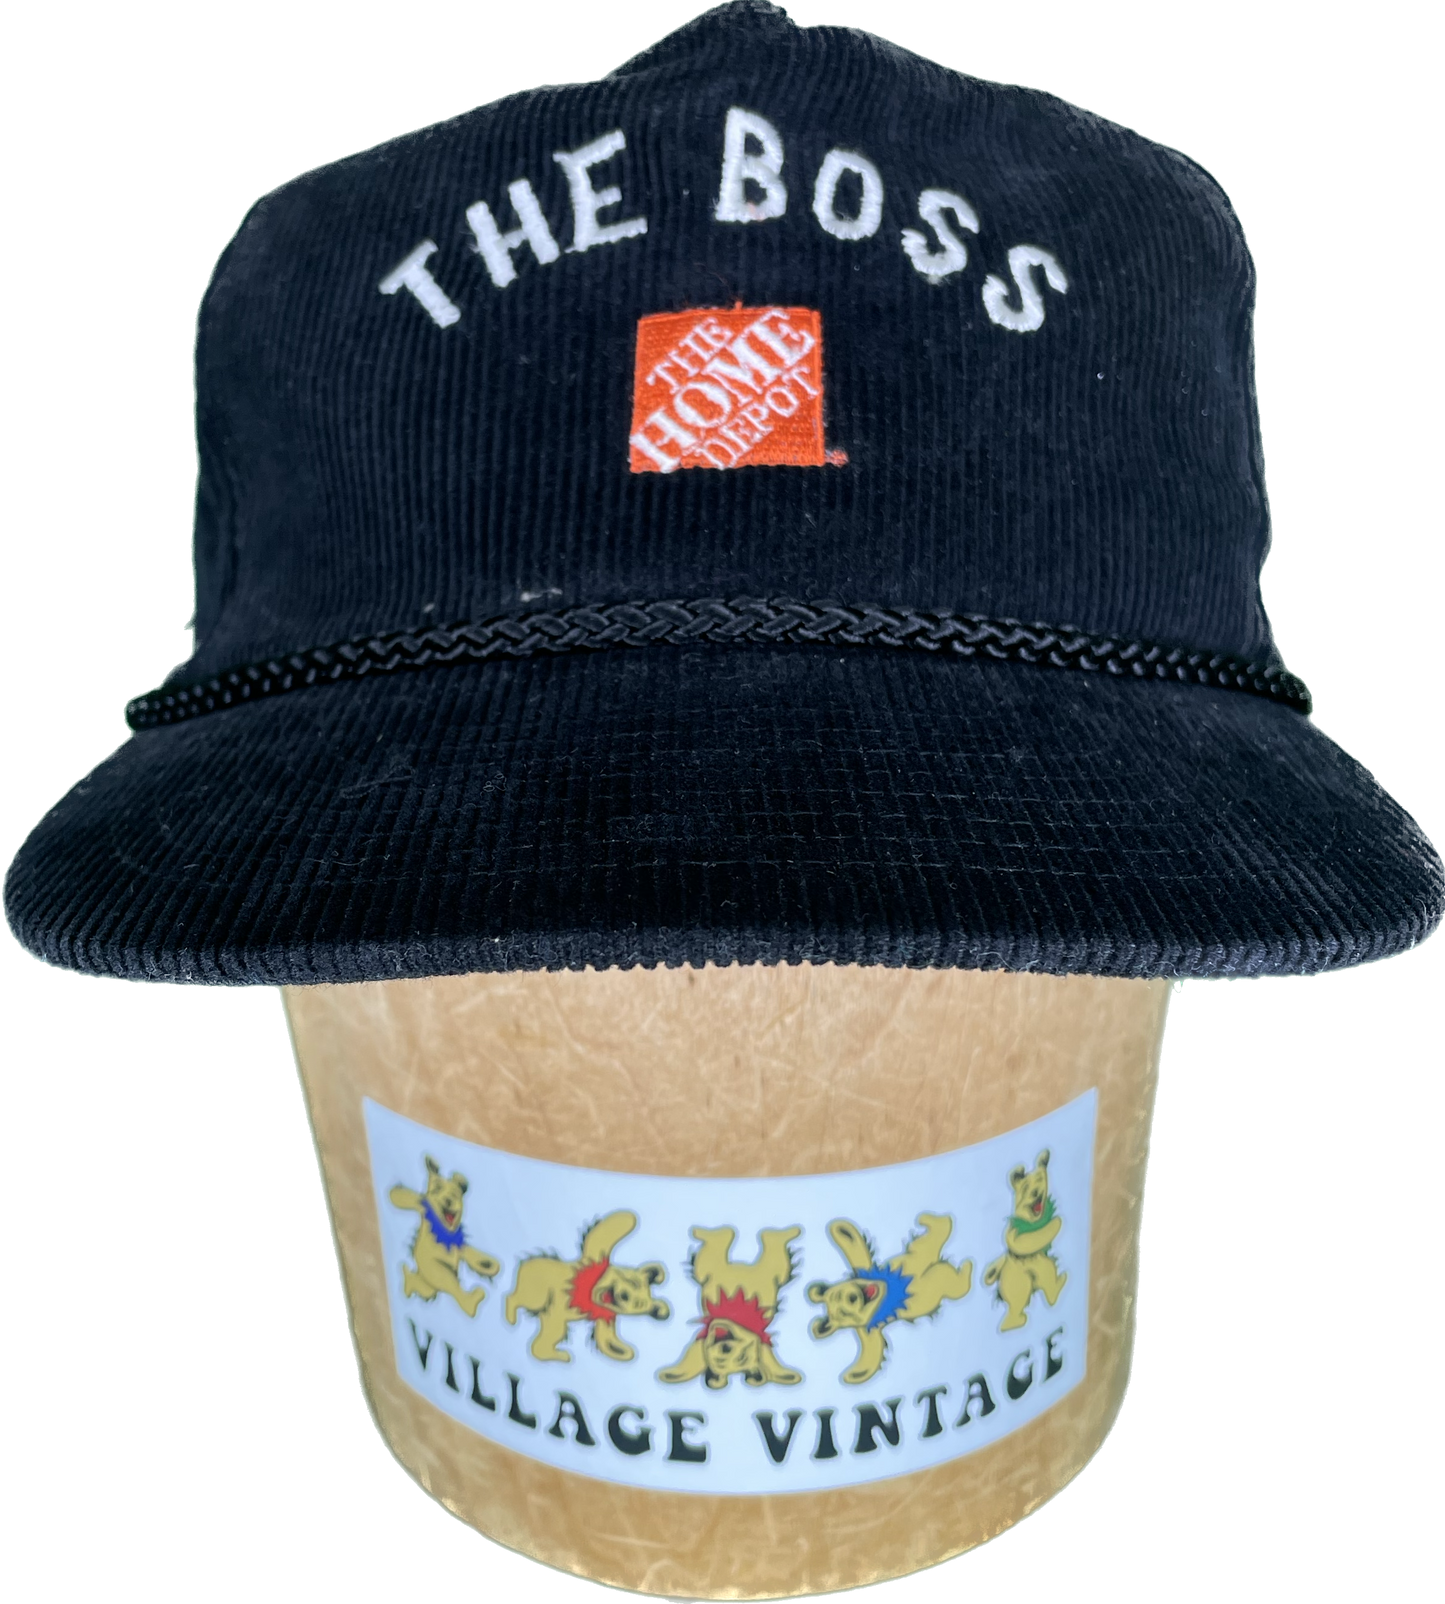 Vintage Home Depot The Boss Corduroy Adjustable SnapBack Trucker Hat